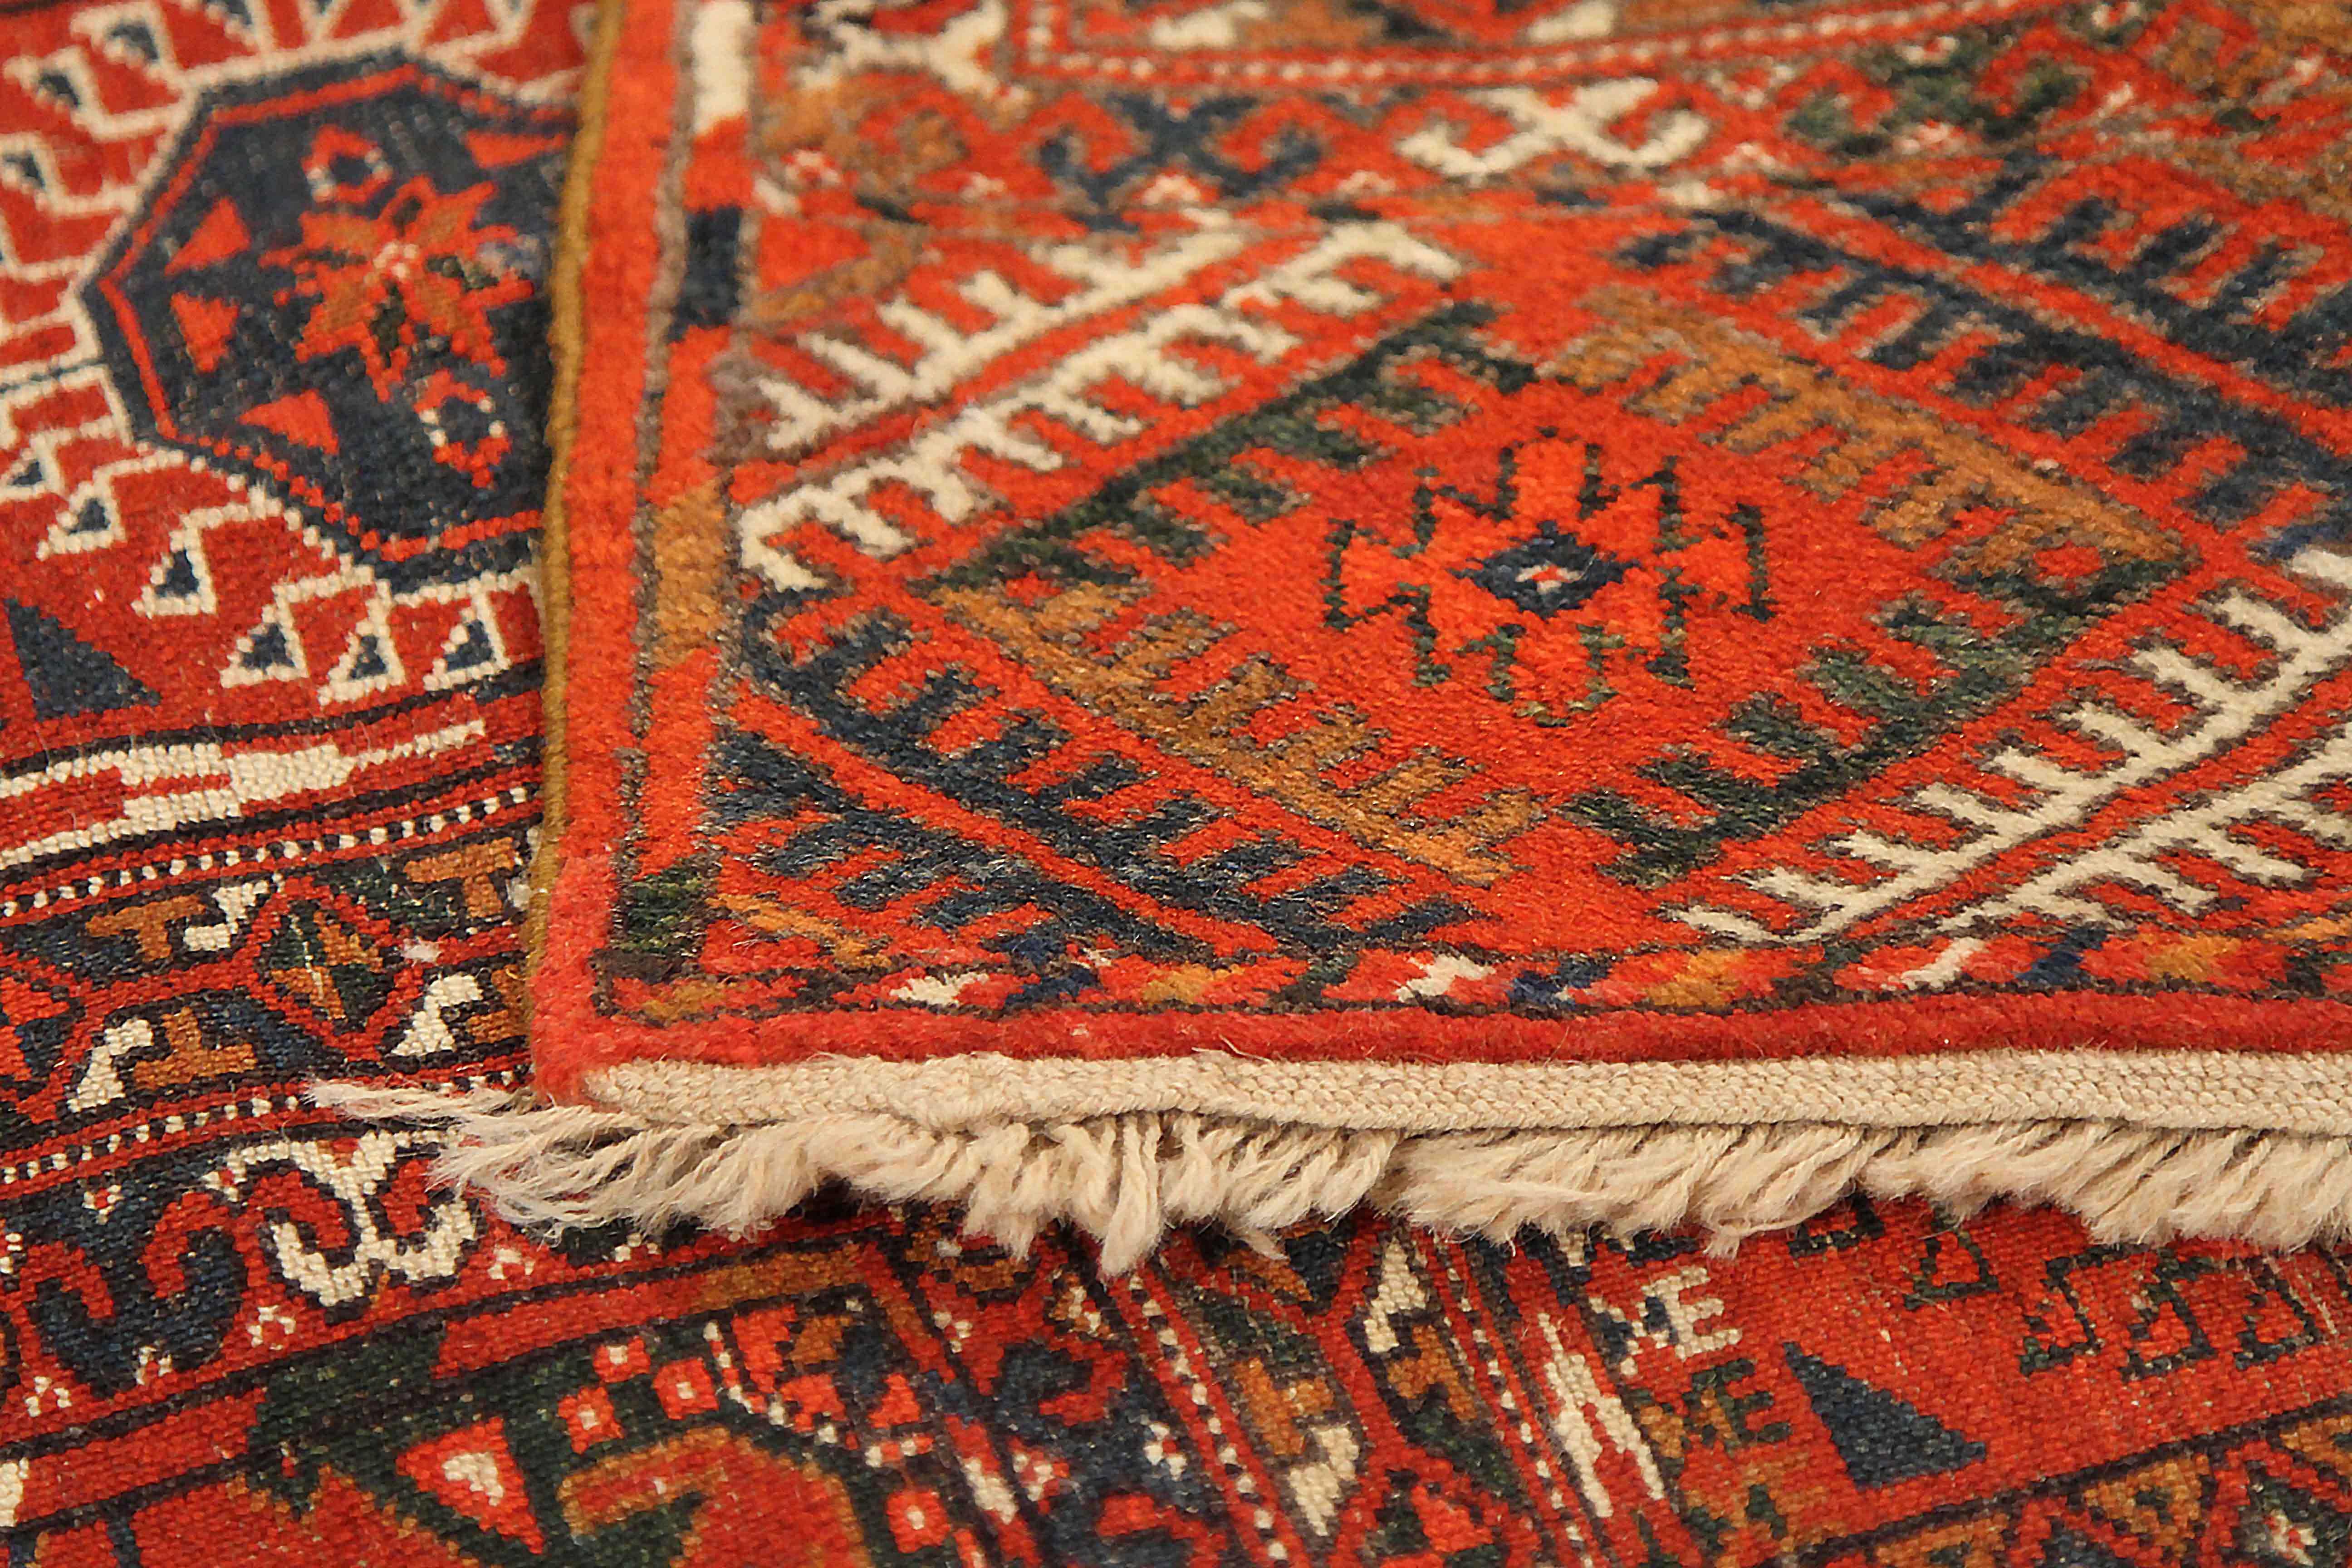 Hand-Woven Antique Persian Area Rug Turkeman Design For Sale